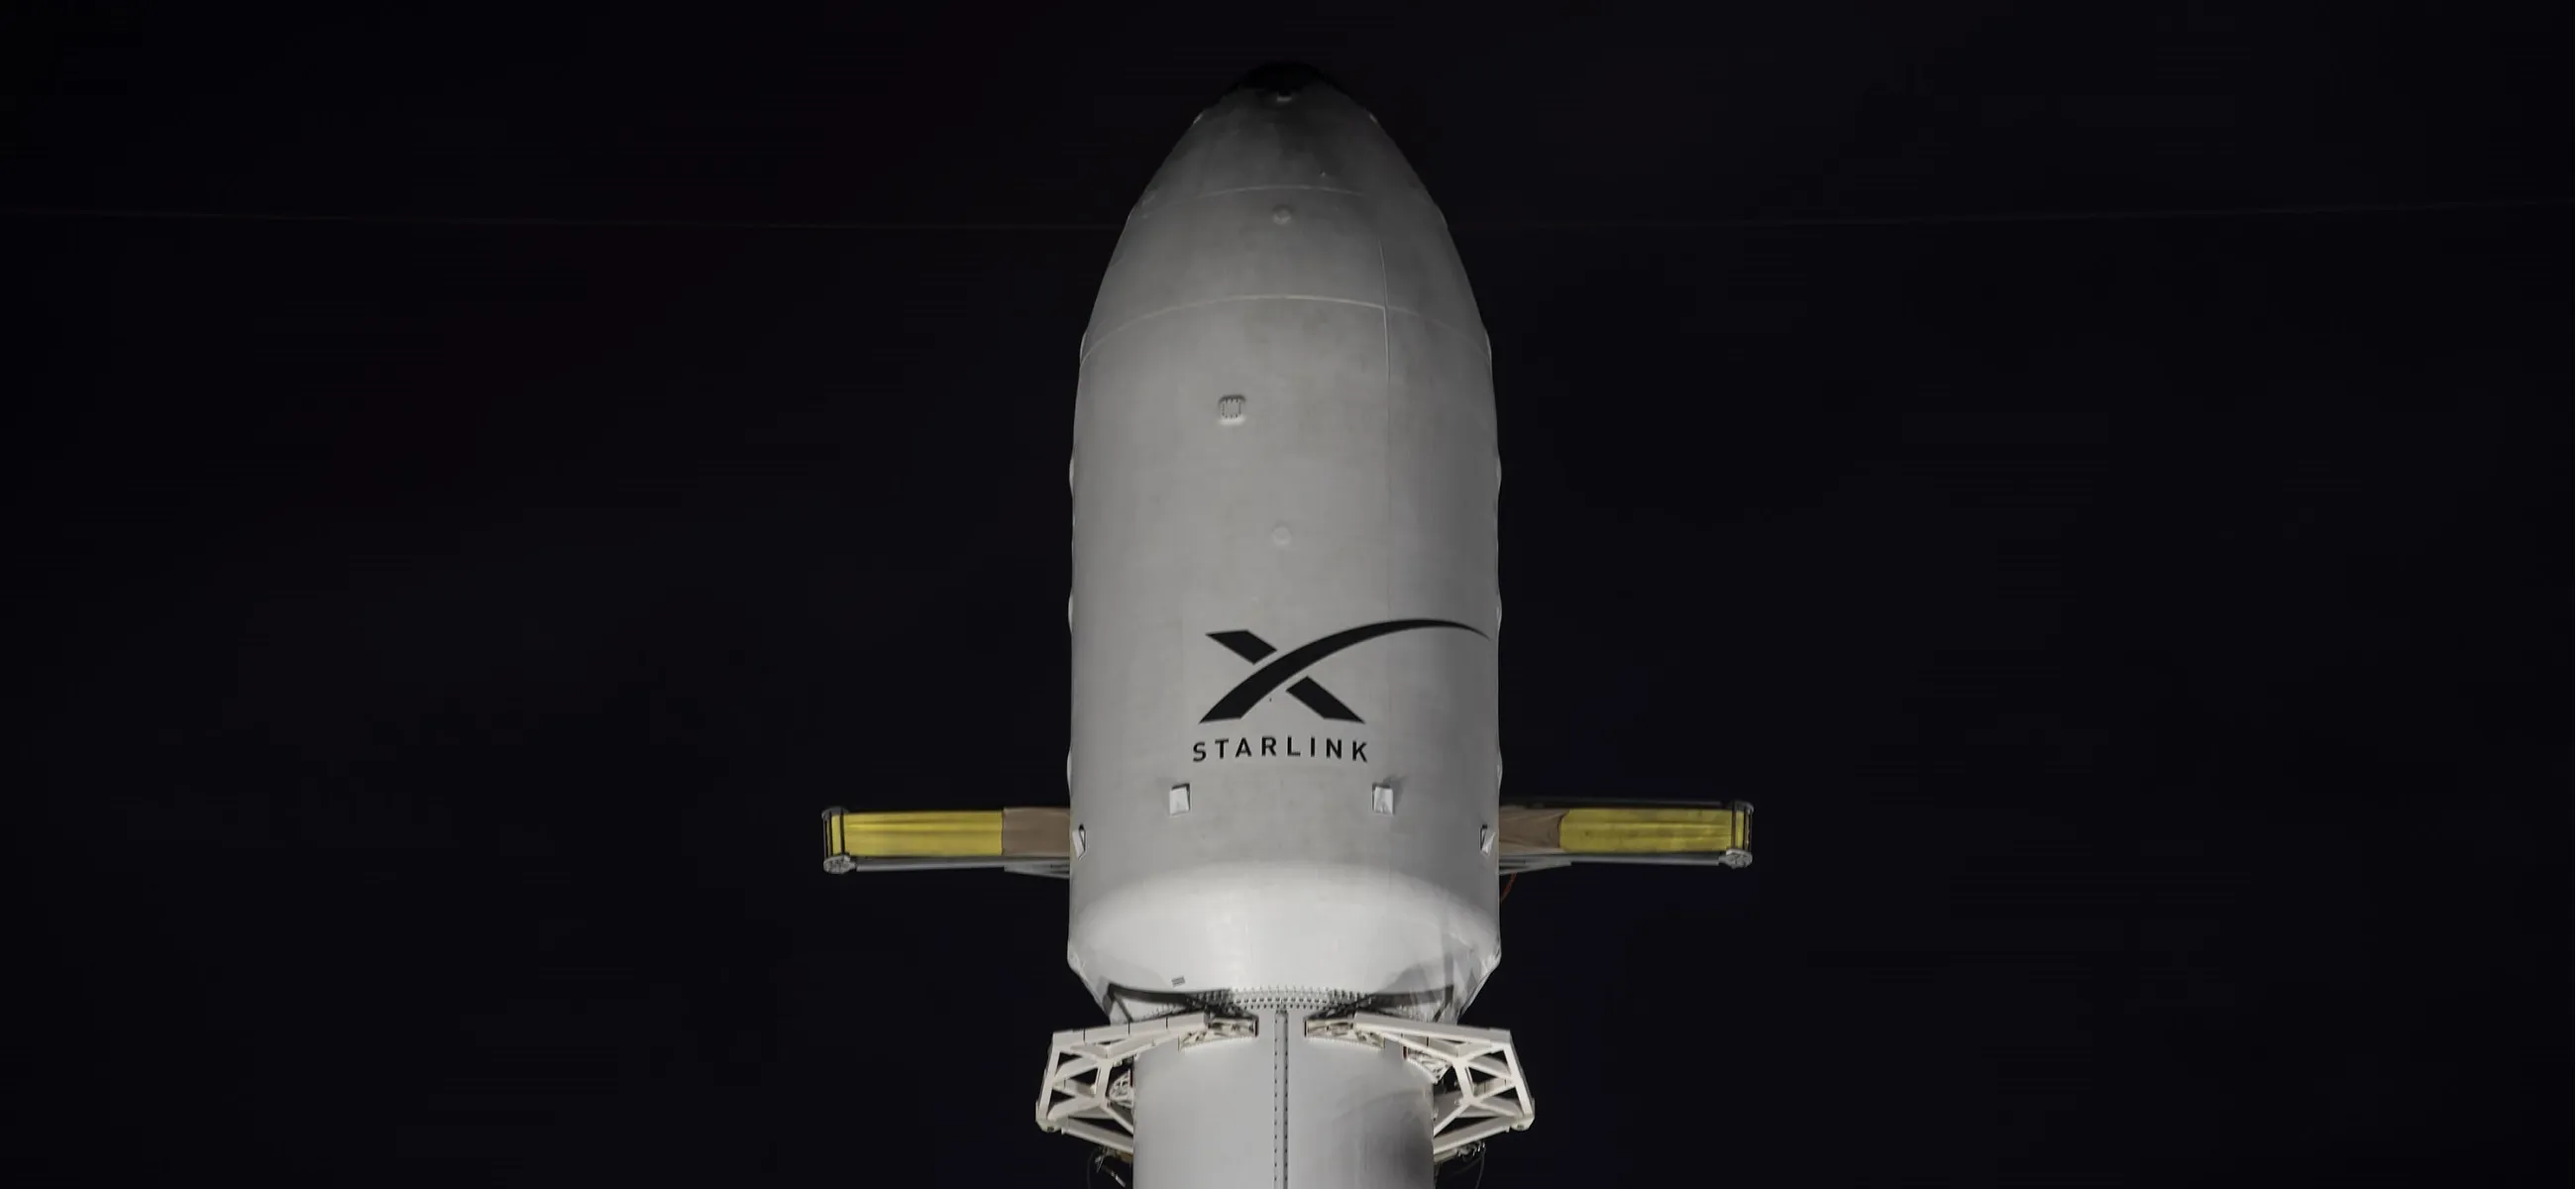 SpaceX 确认其星链卫星宽带可低于 40ms 延迟